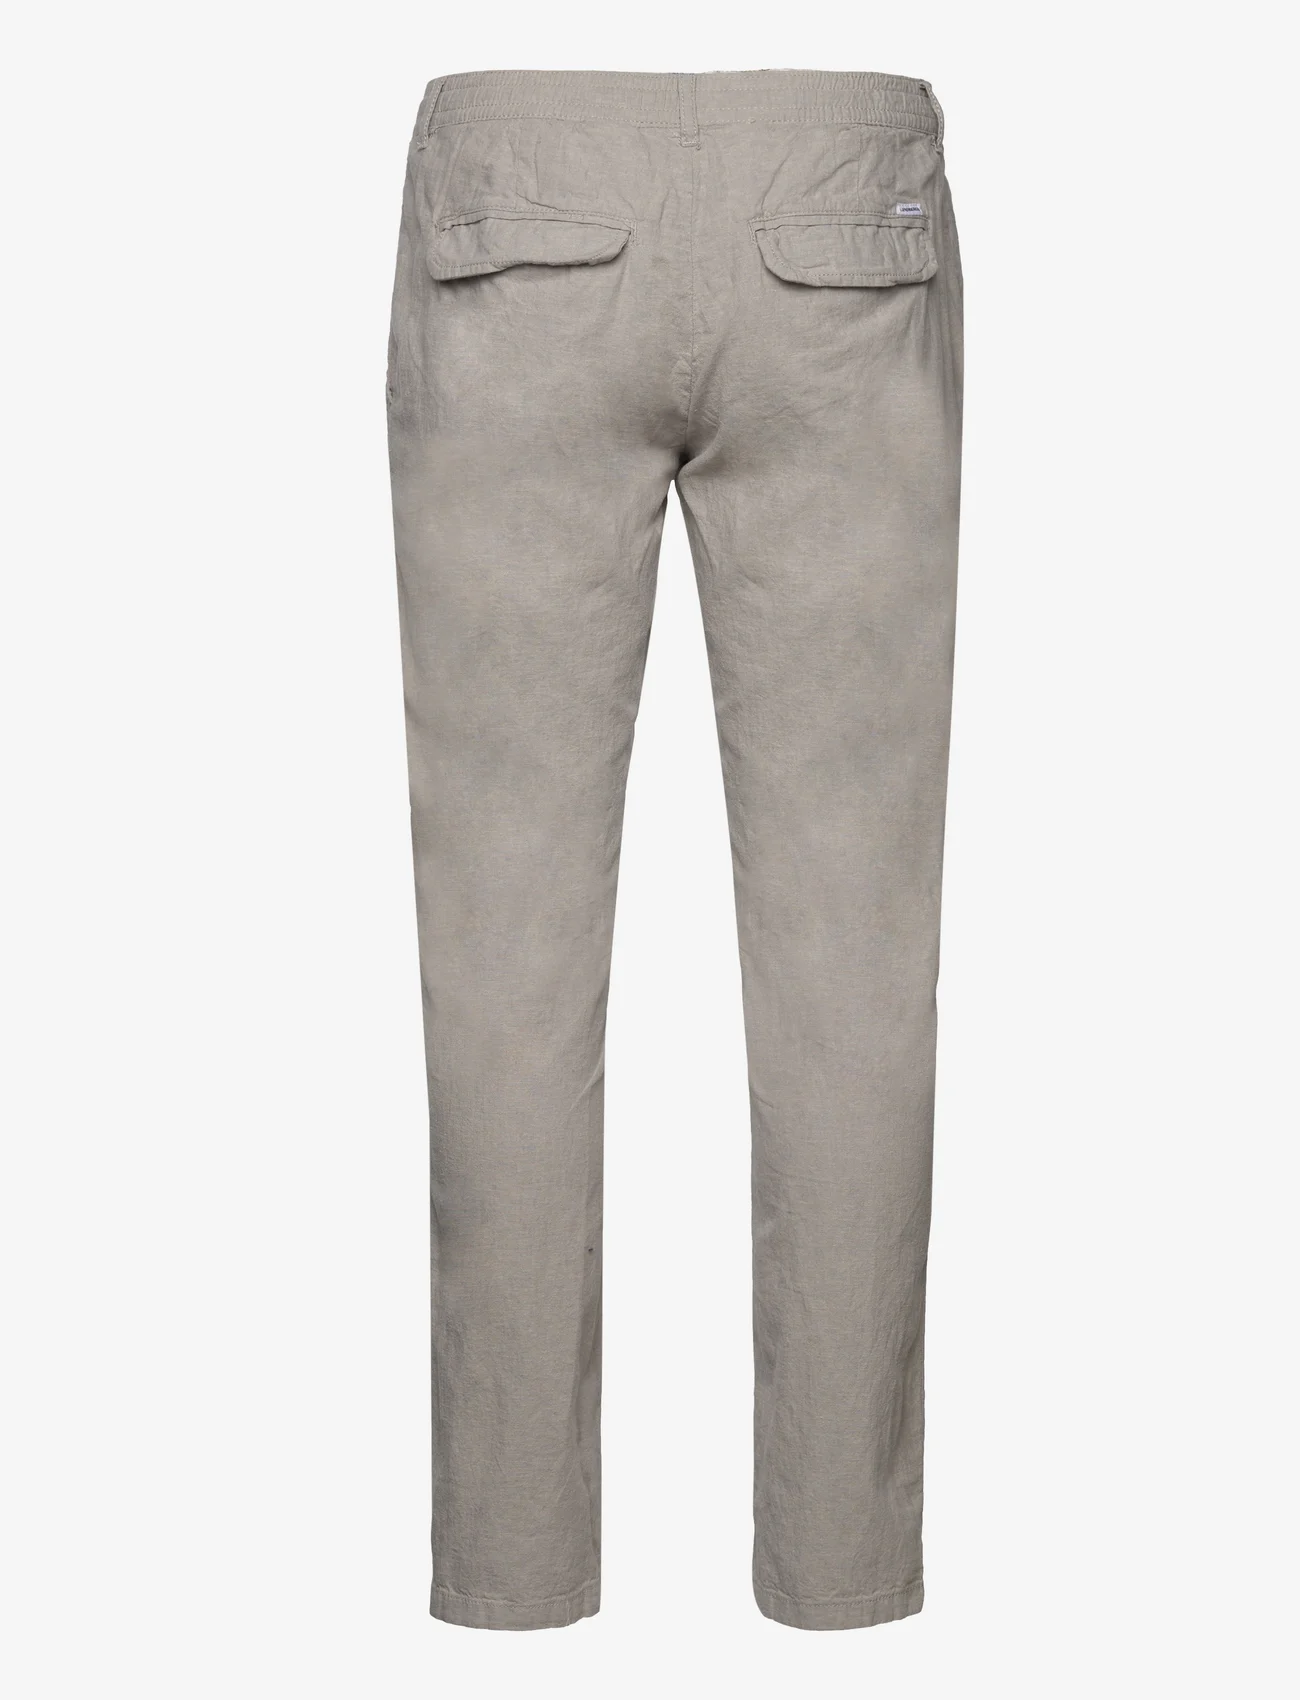 Lindbergh - Linen pants - linen trousers - grey - 1